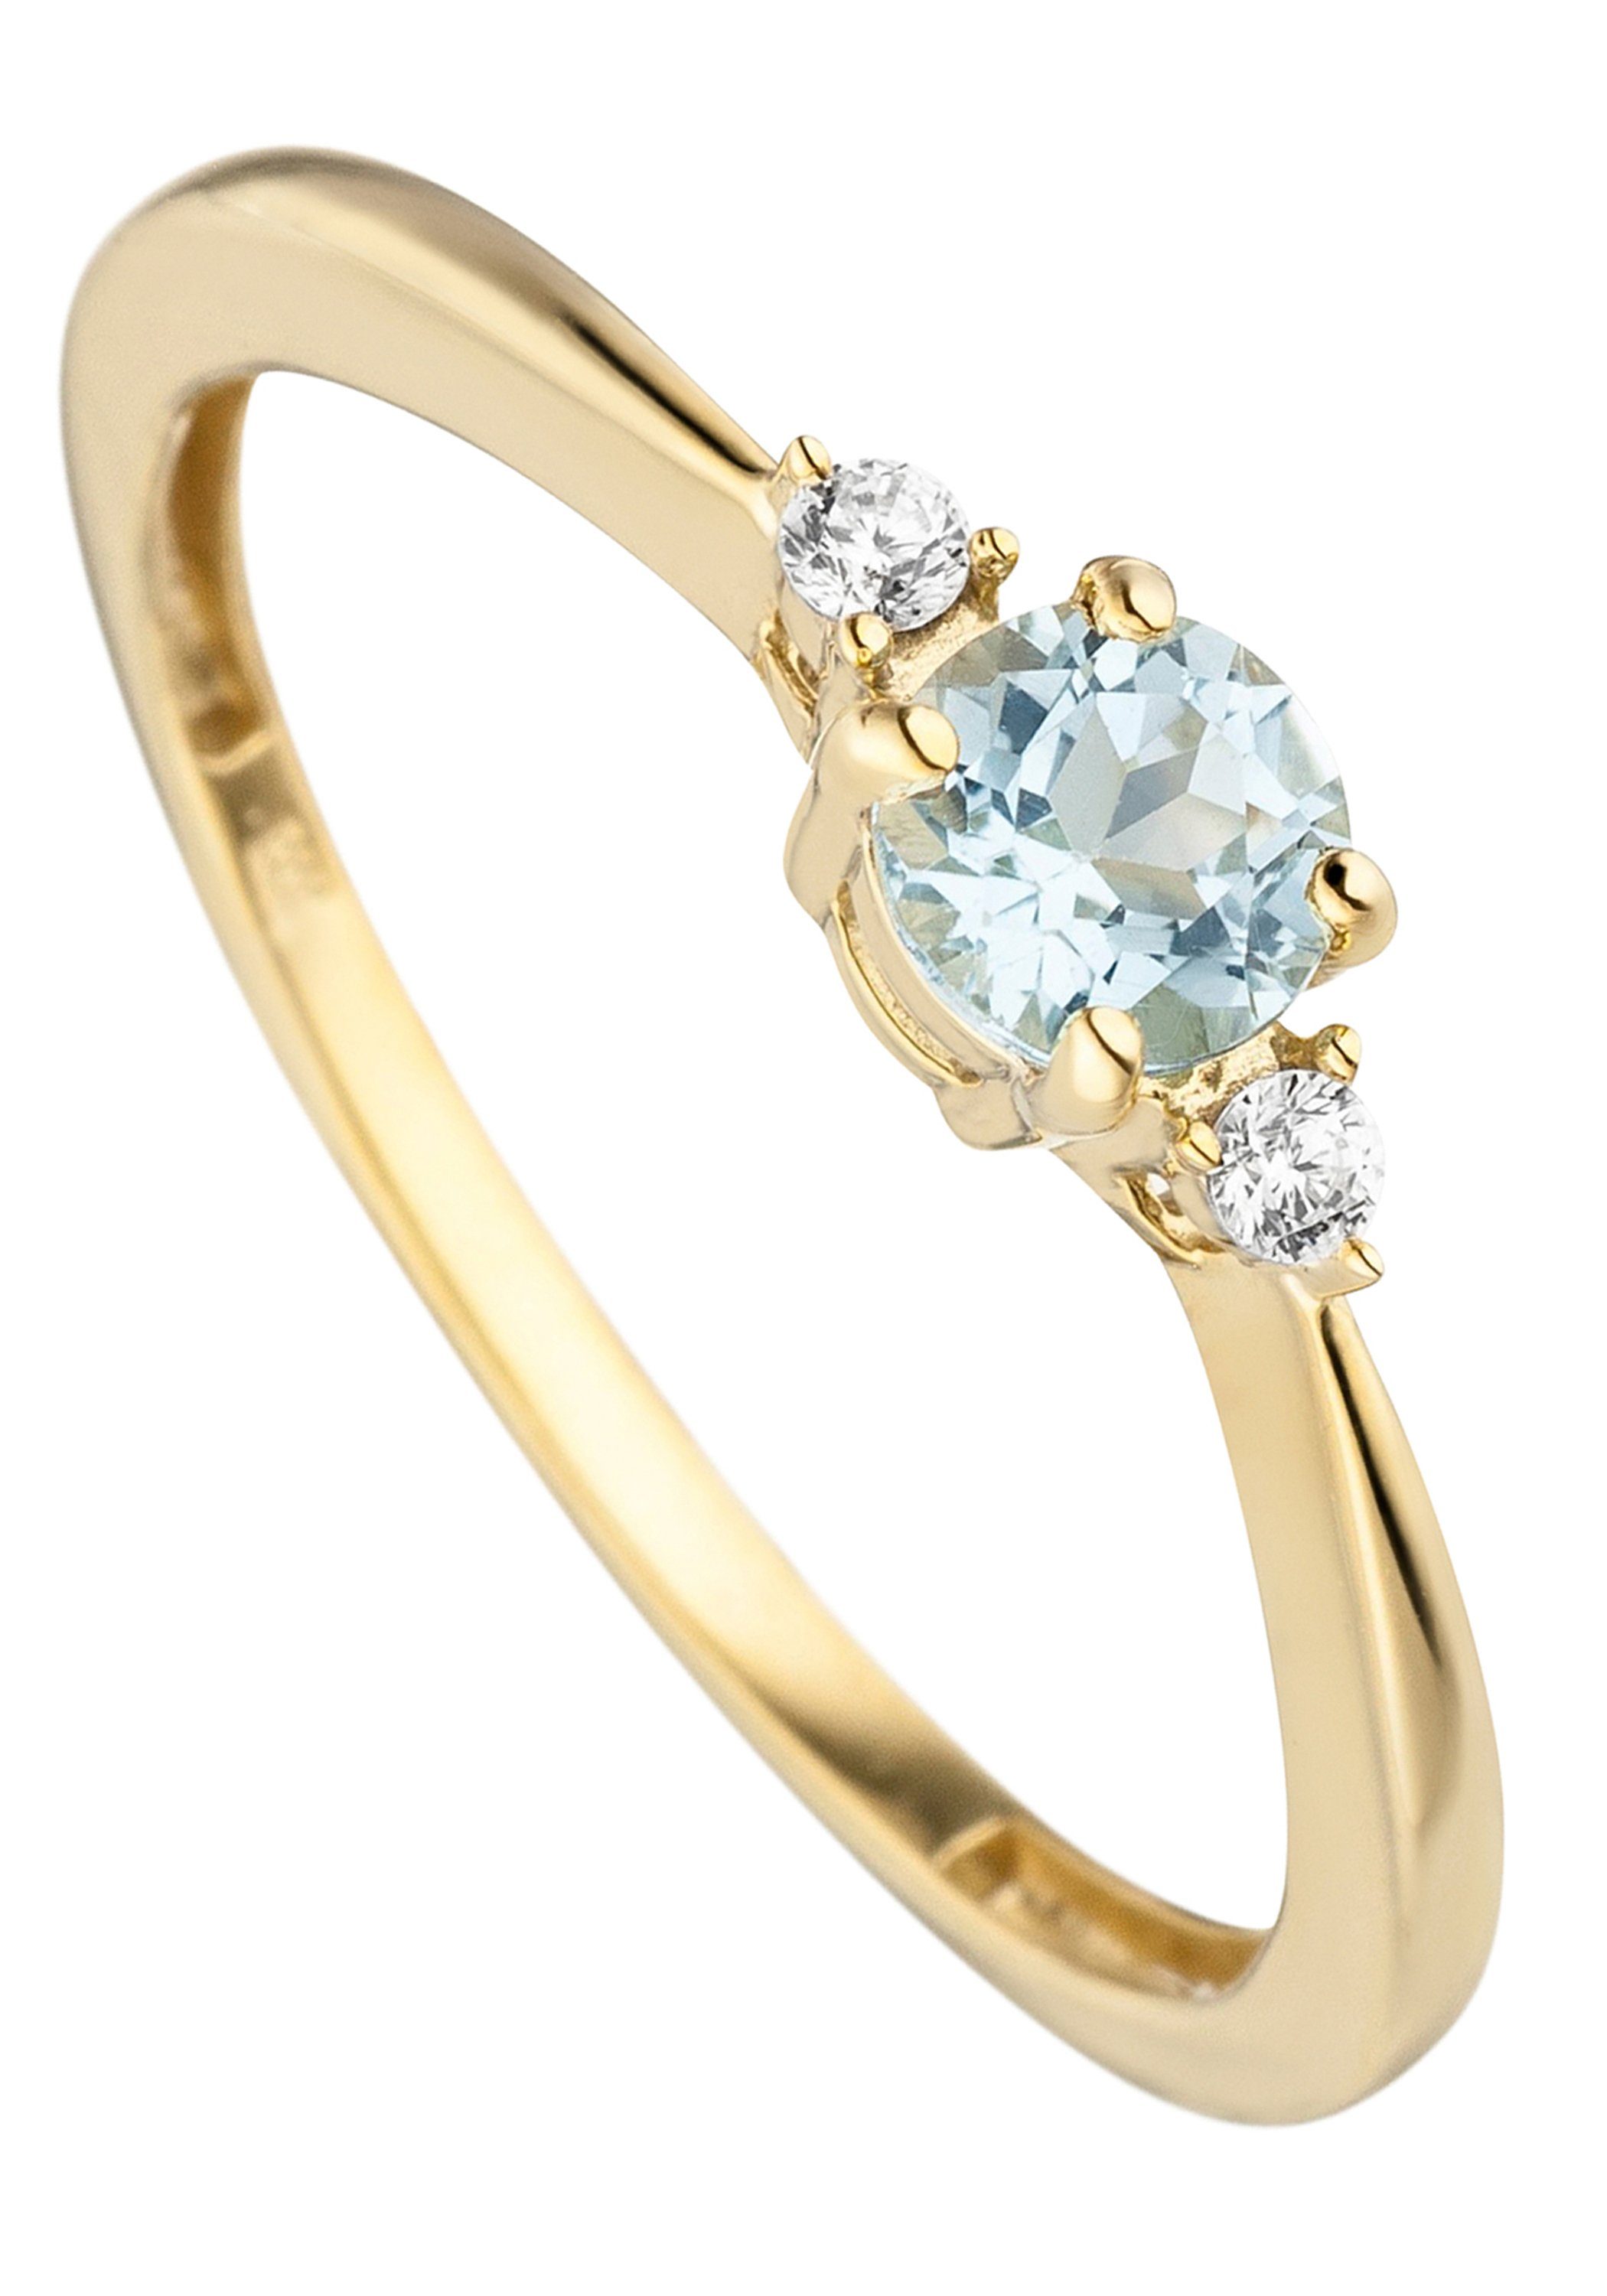 JOBO Fingerring Ring mit Blautopas und Zirkonia, 333 Gold